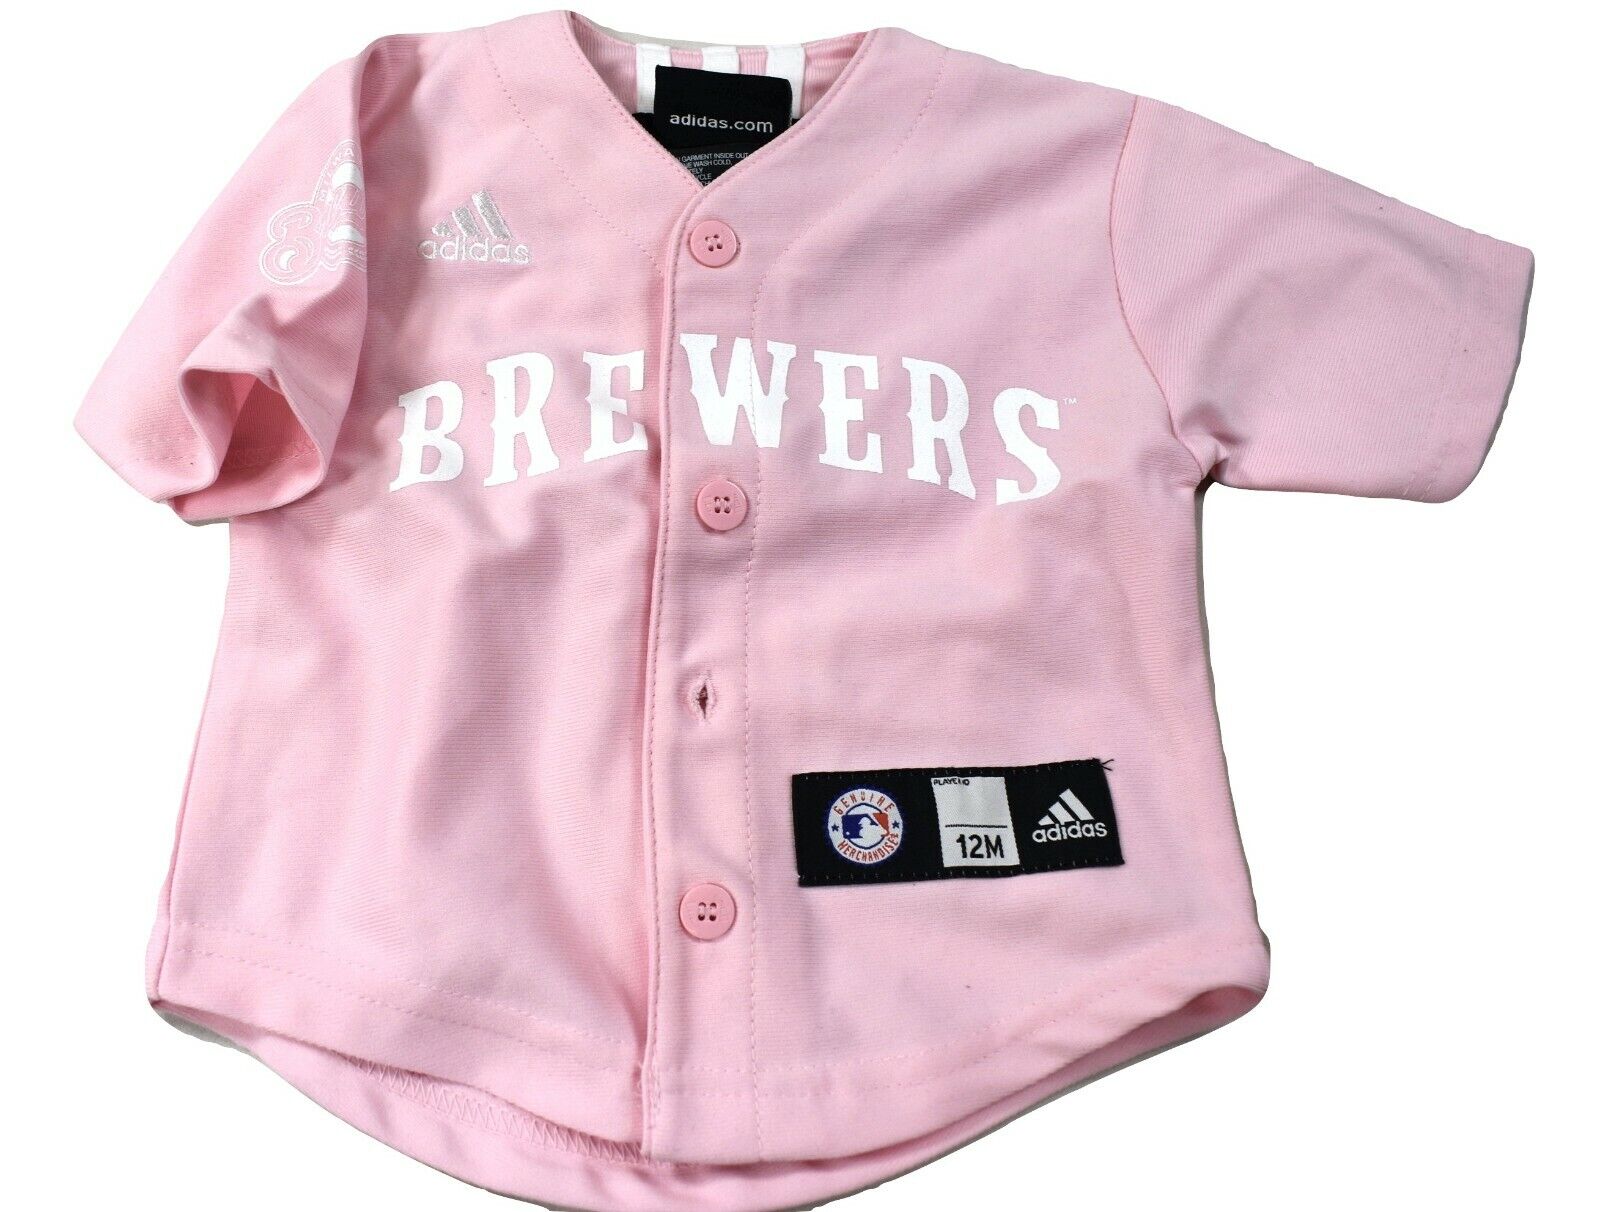 infant baseball jersey